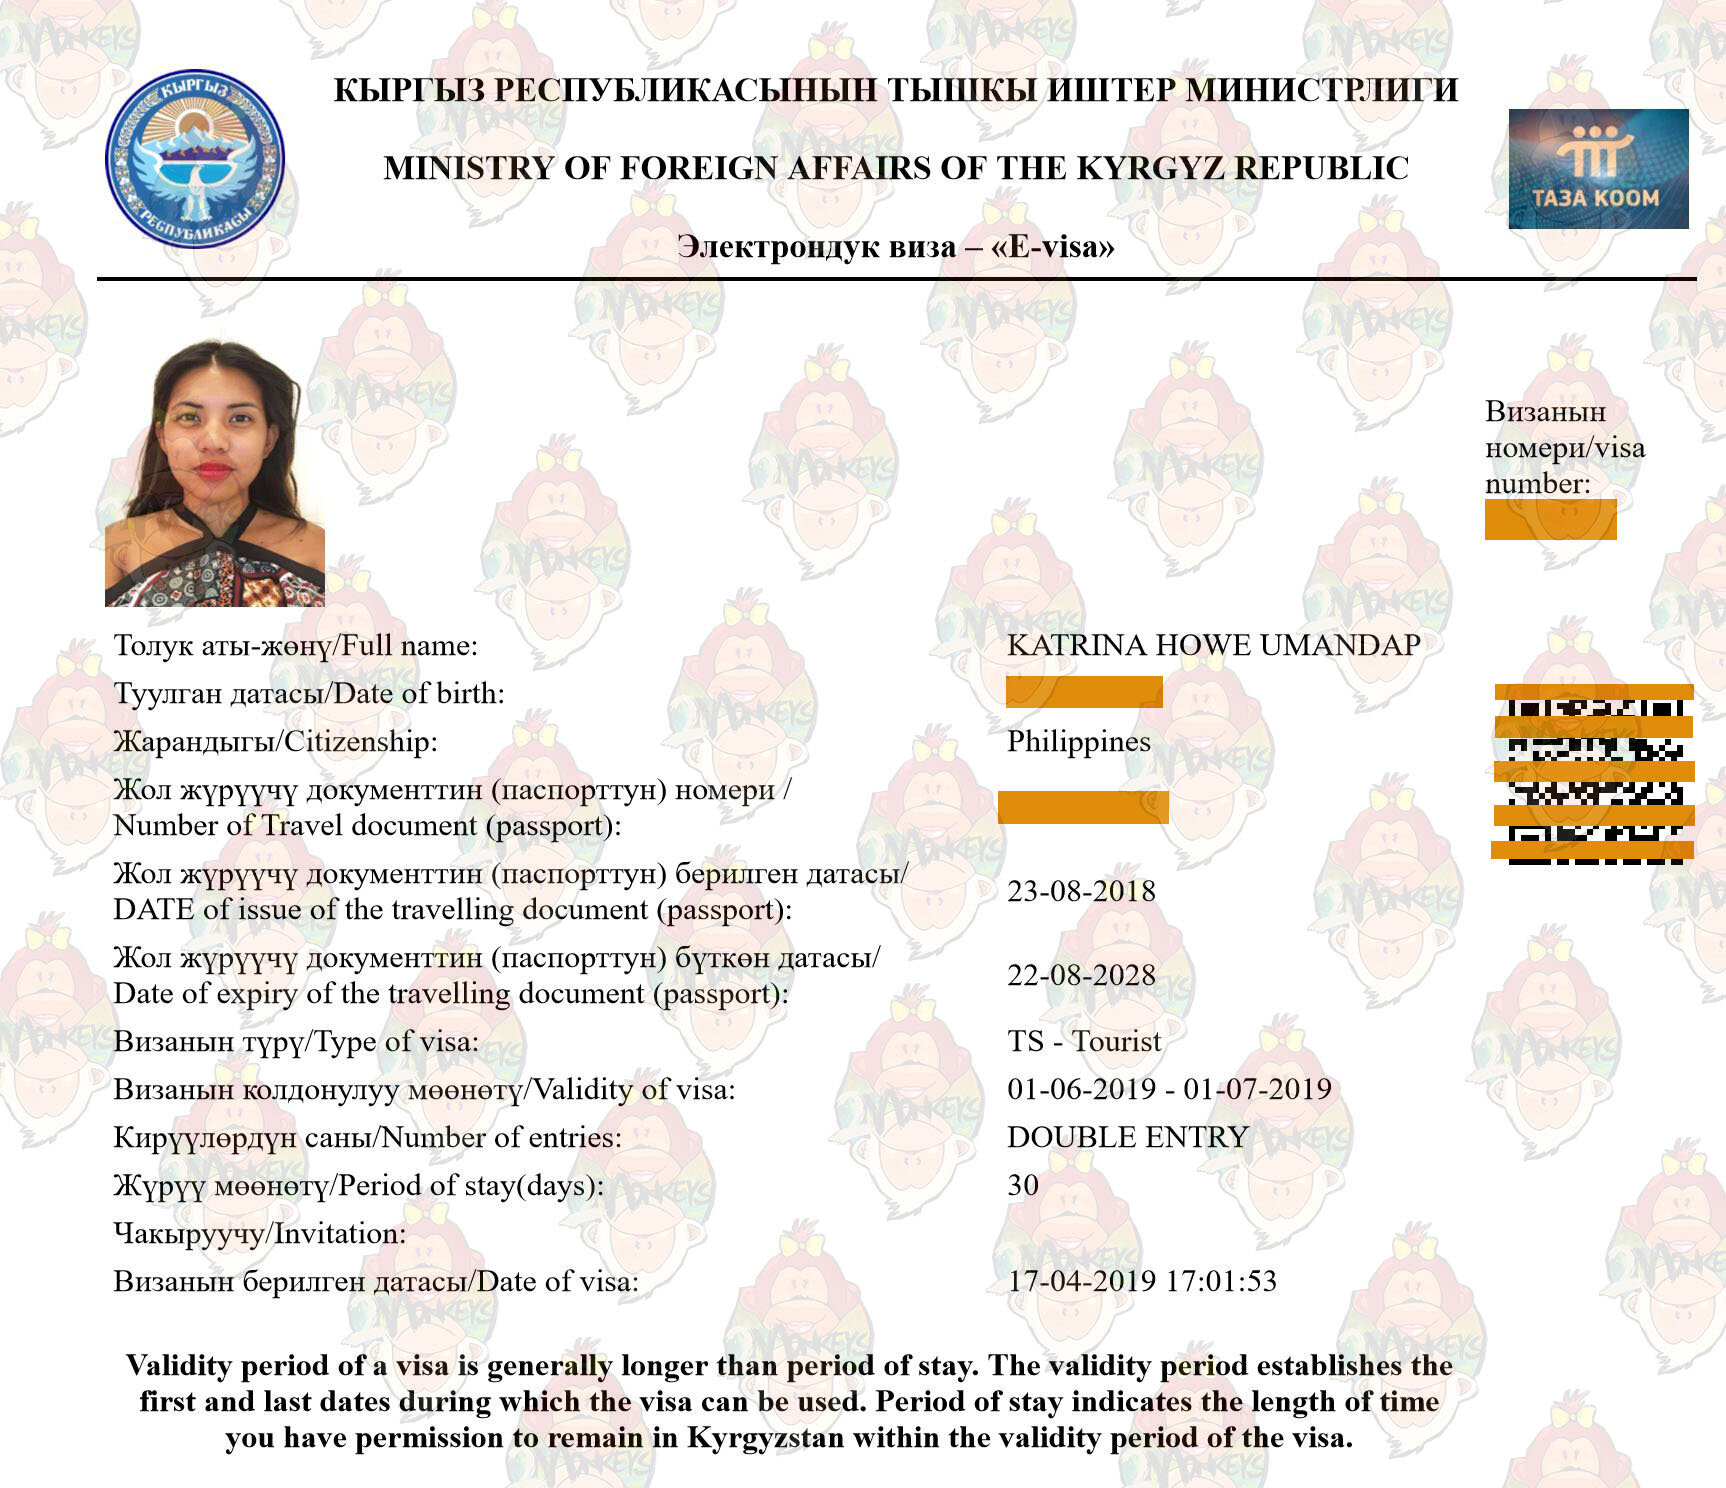 kyrgyzstan tourist visa for indian